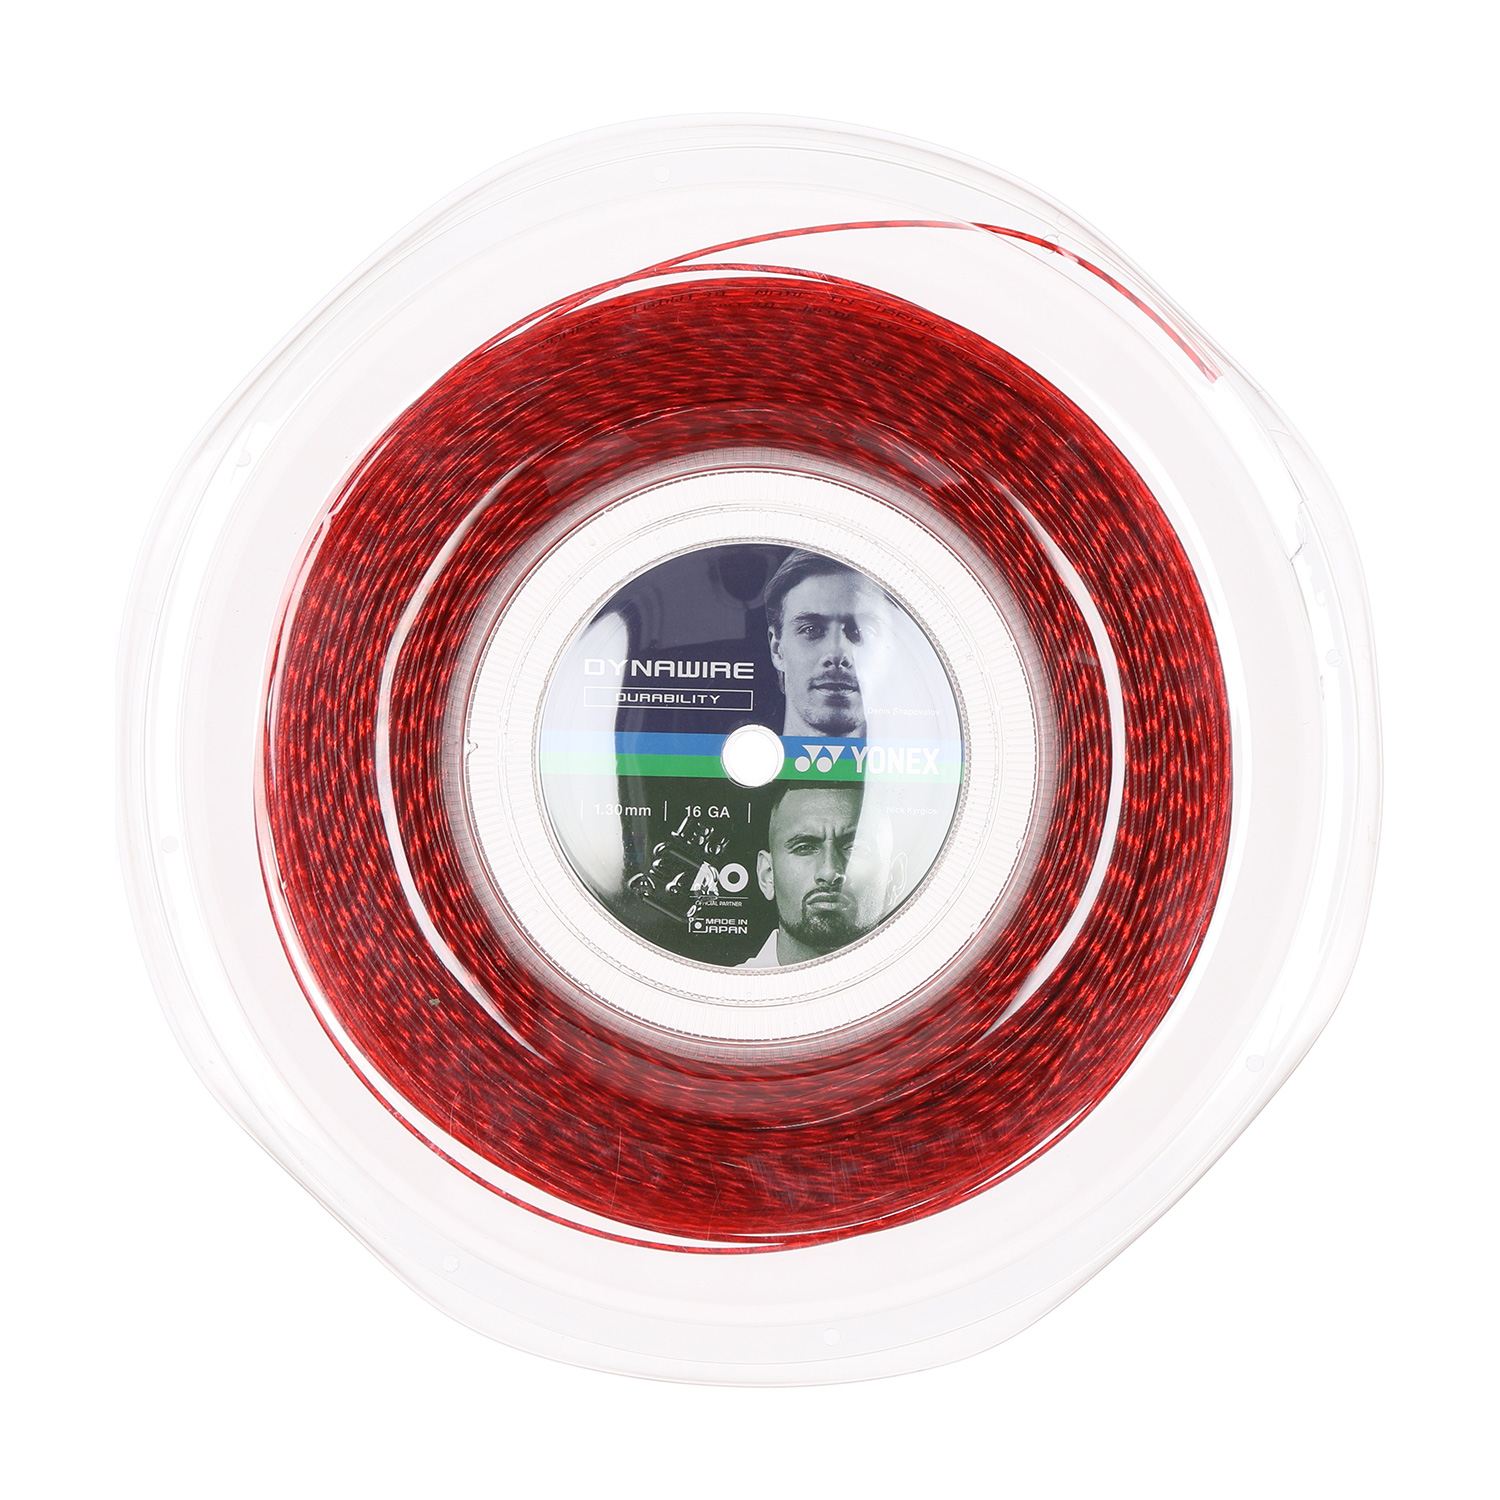 Yonex Dynawire 1.30 String 200 m Reel - Red